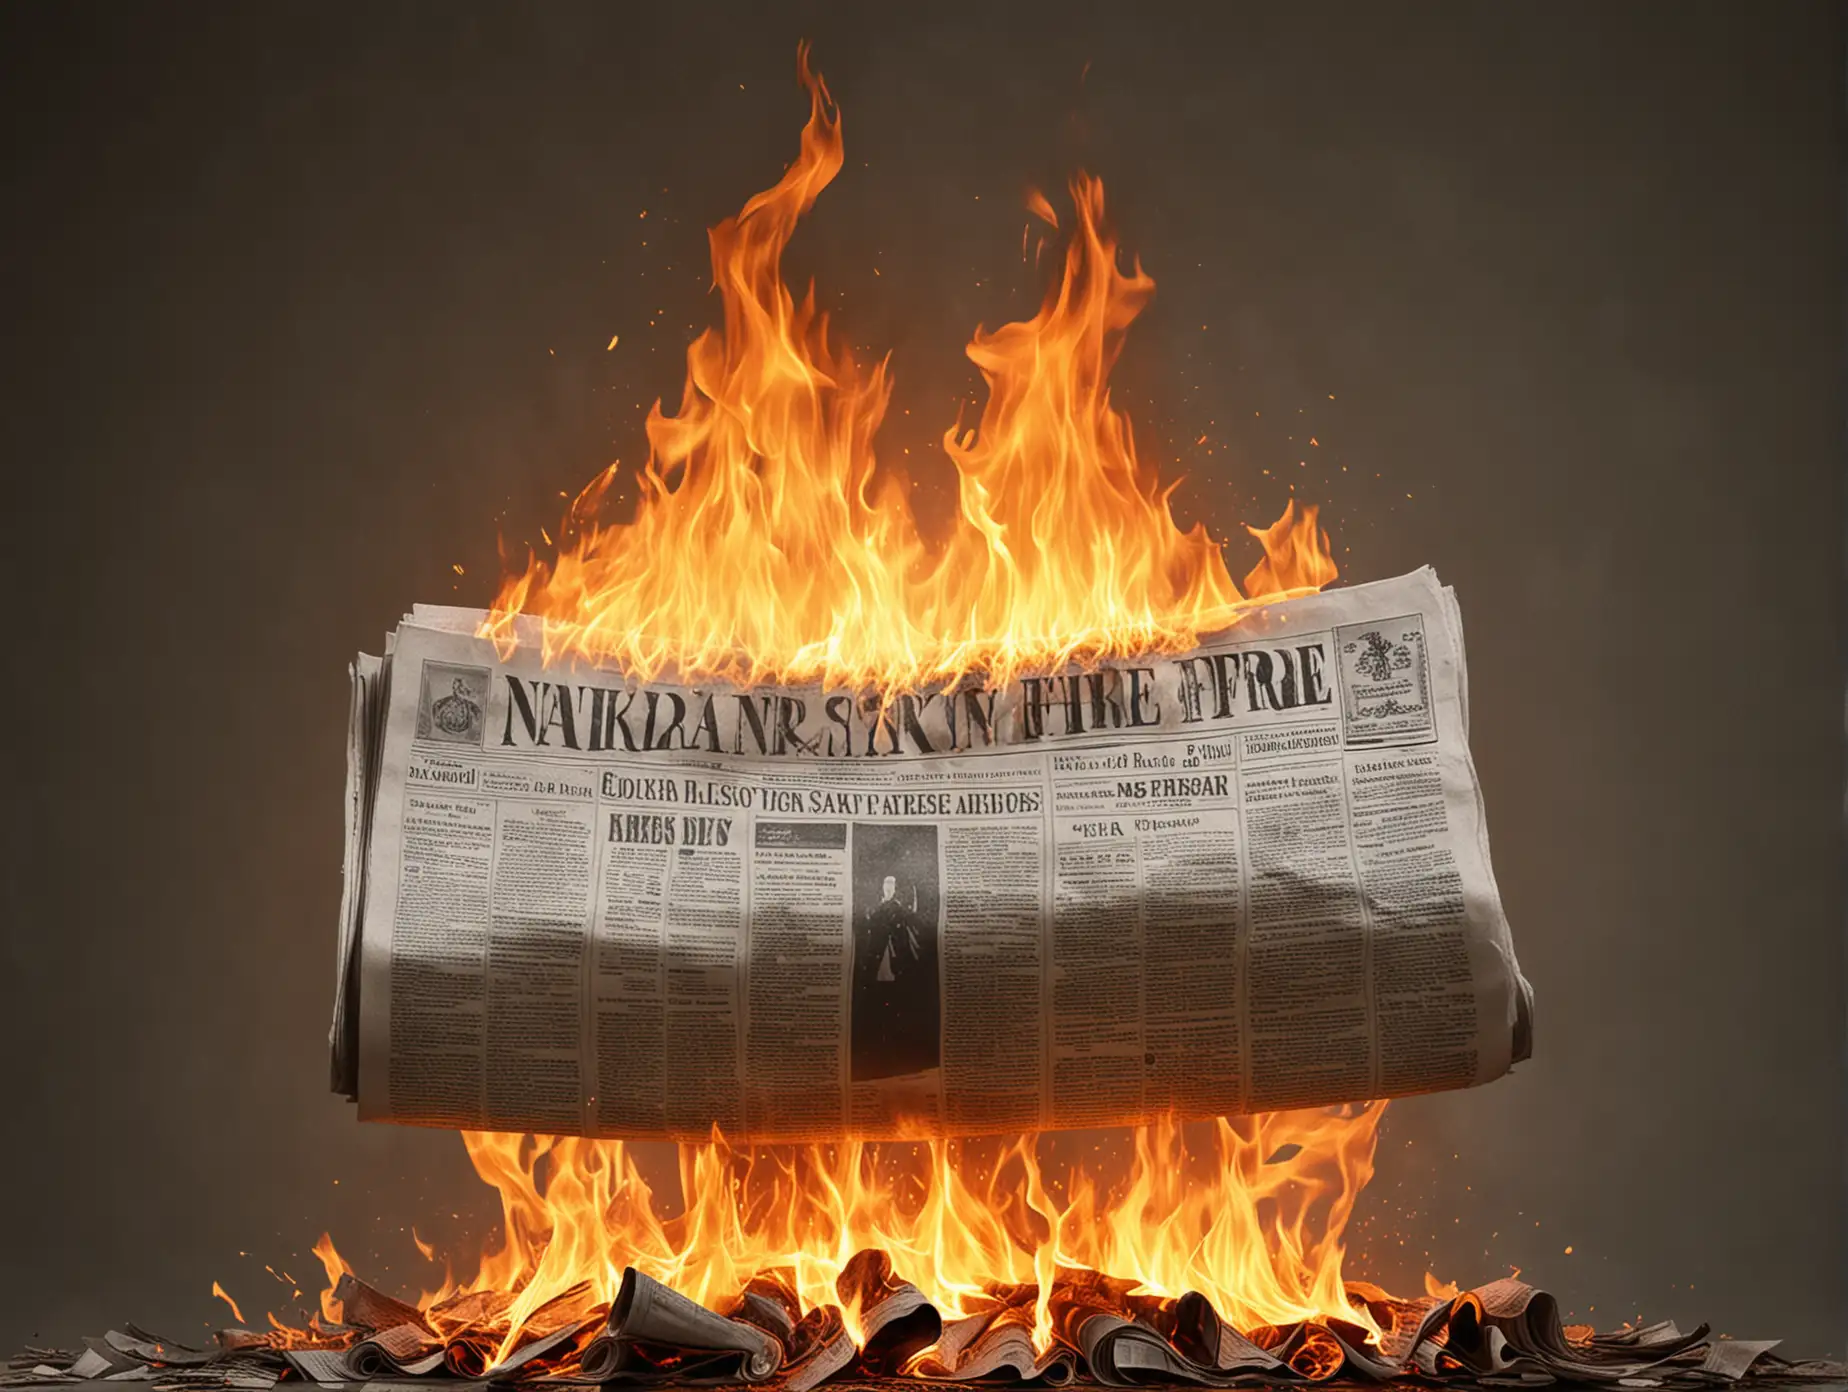 Burning Newspaper Digital Art Depicting a Fiery Crisis